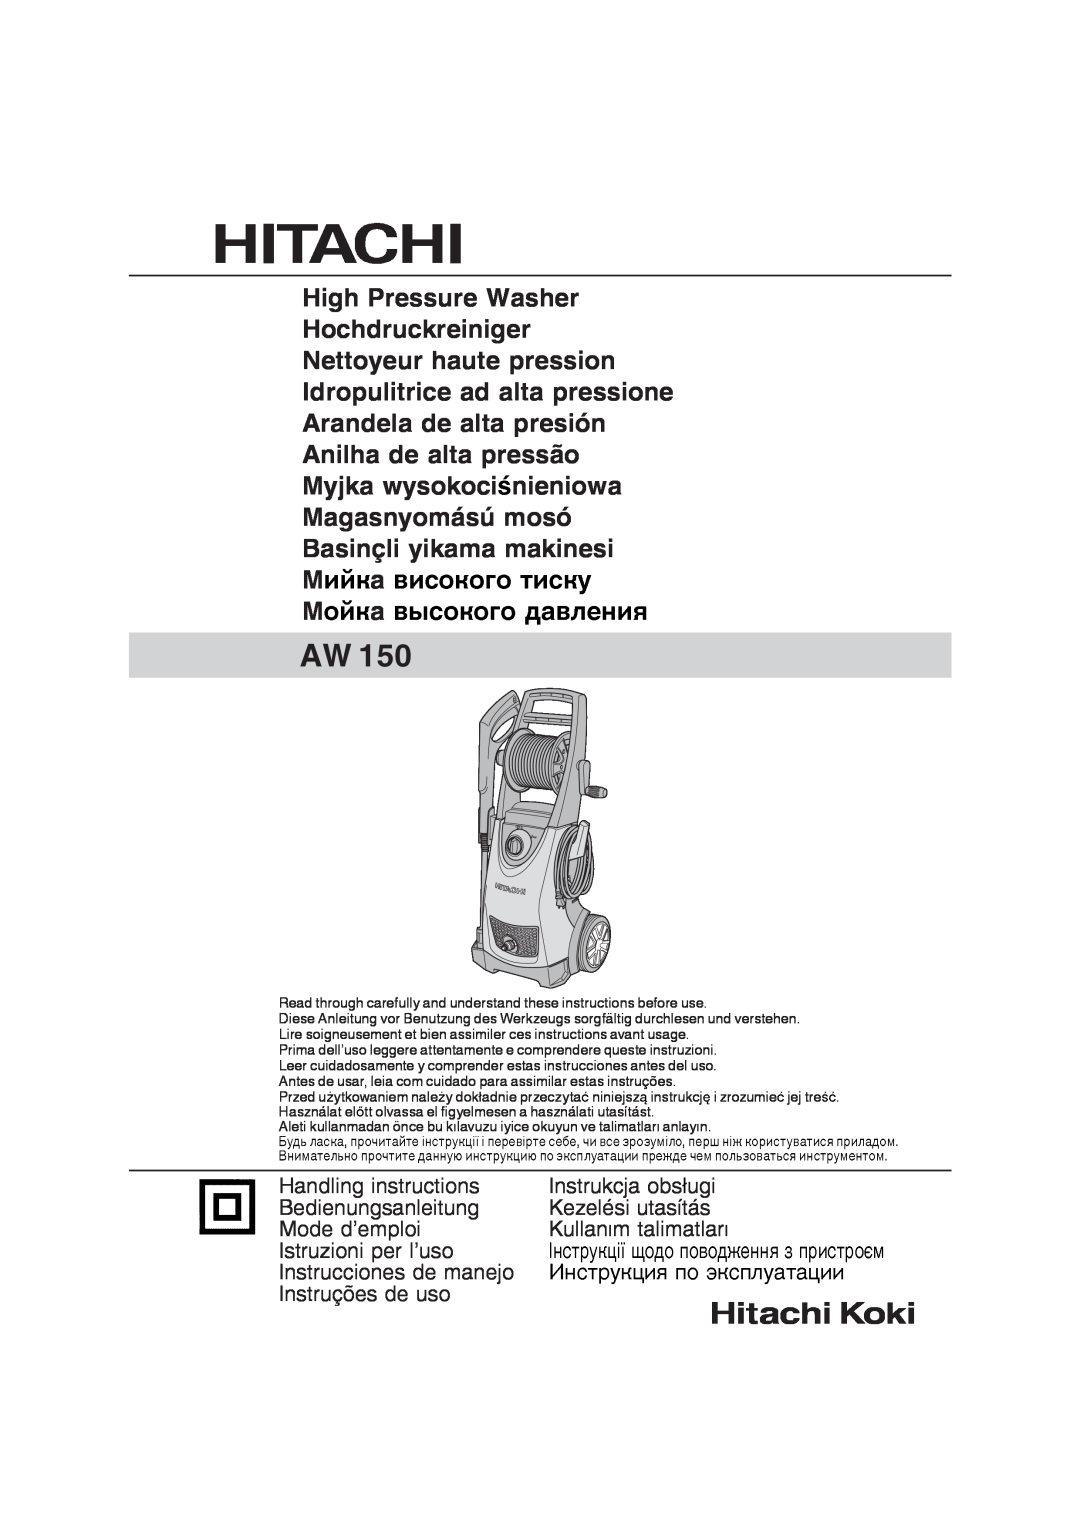 Hitachi Koki USA AW 150 manual High Pressure Washer Hochdruckreiniger Nettoyeur haute pression, Handling instructions 